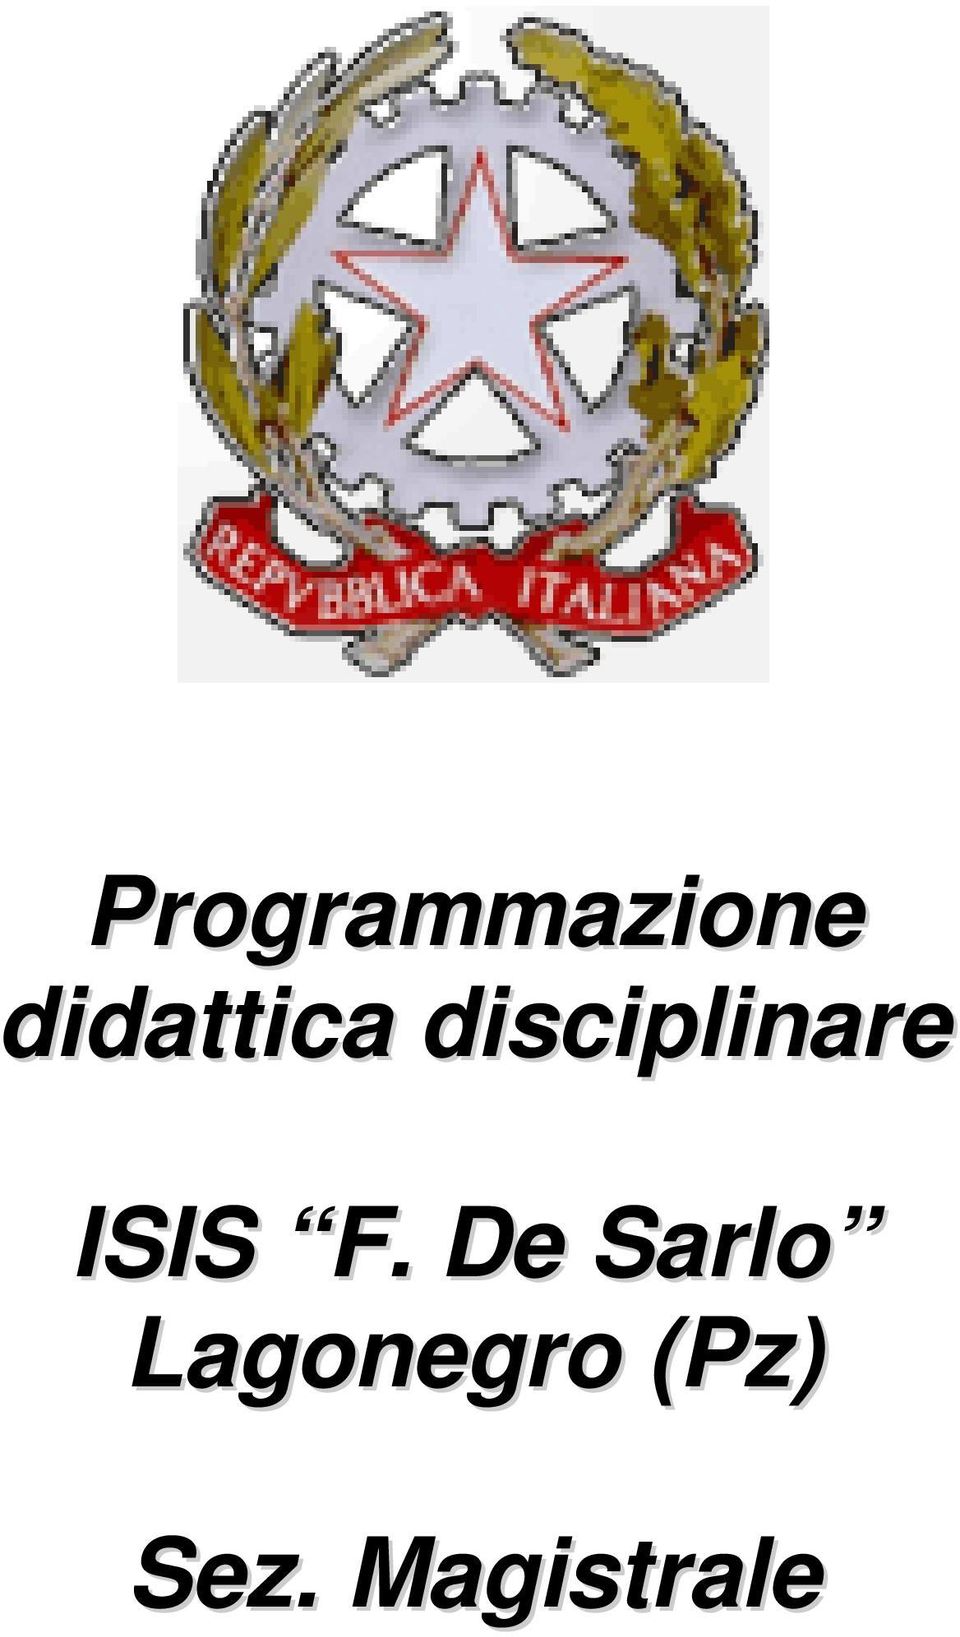 disciplinare ISIS F.